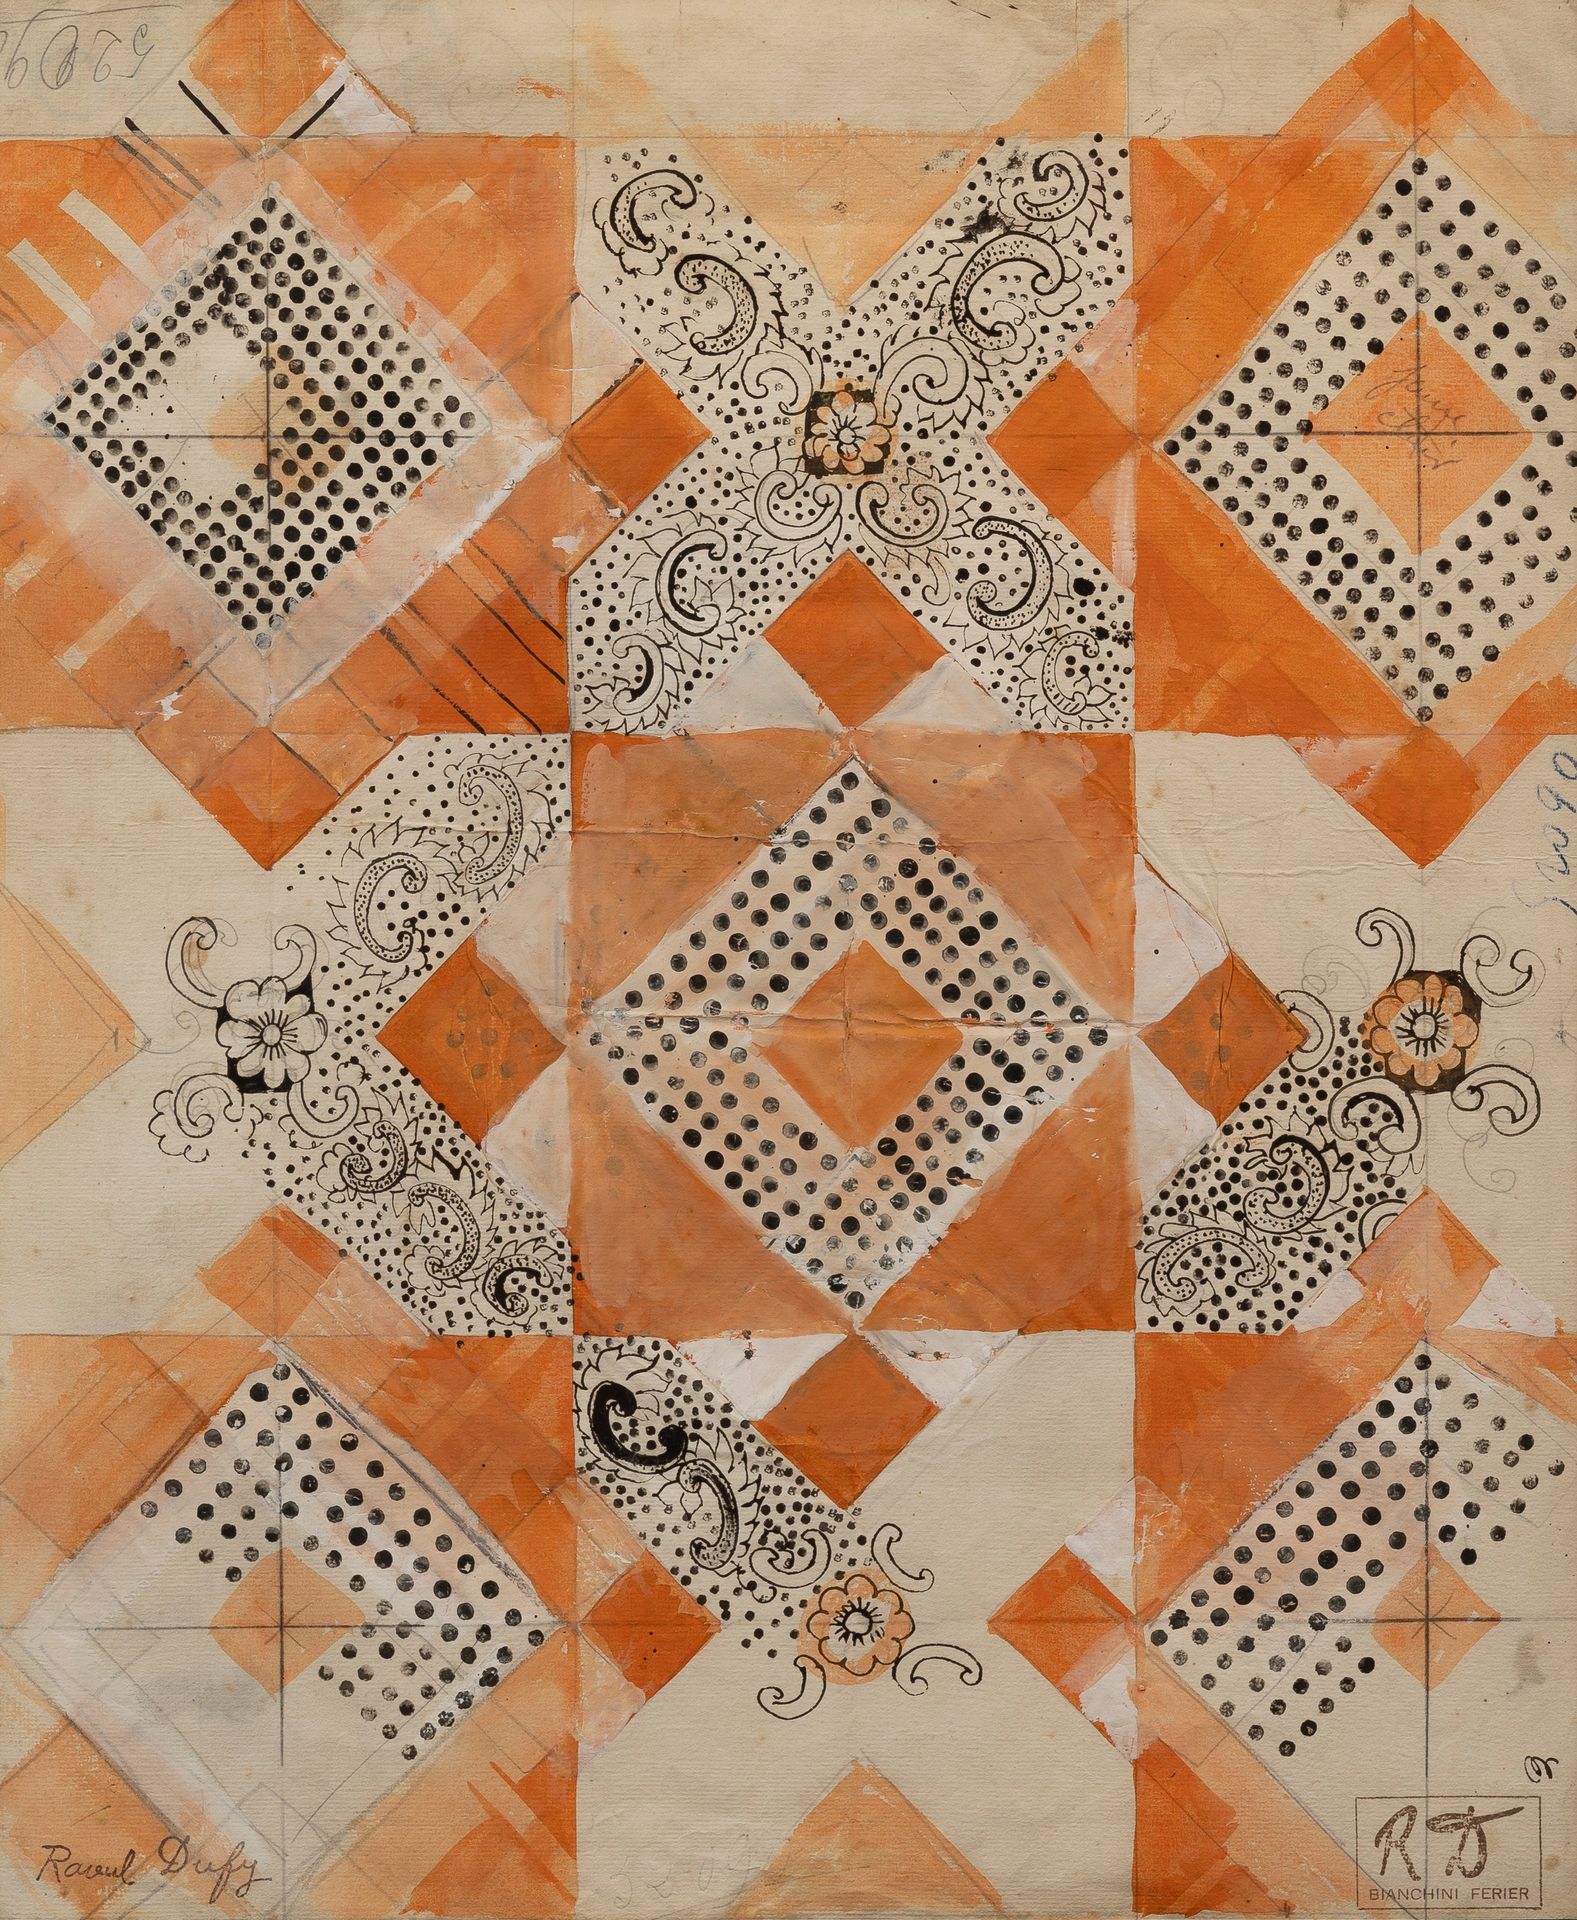 Null 拉乌尔-杜菲 (1877-1952)

"Bianchini-Ferier的织物项目"。

纸上铅笔和水粉画，右下方有首字母RD的印章，左下方有签名的&hellip;